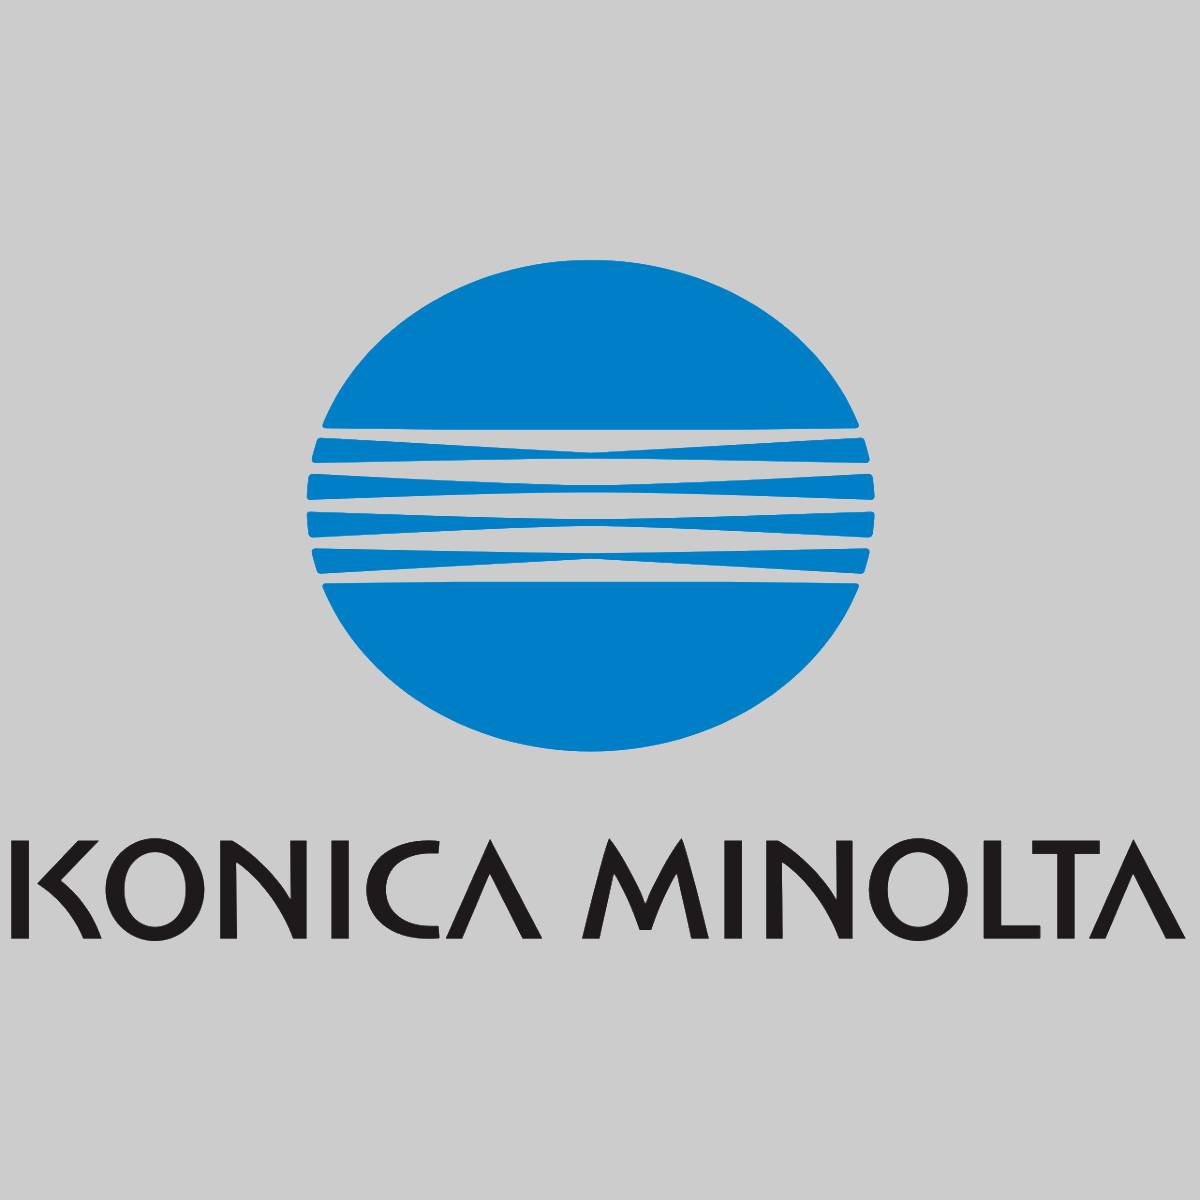 "Originální Konica Minolta Fuser Cleaning Web A4EW731400 pro Bizhub PRO 951 NOVINKA